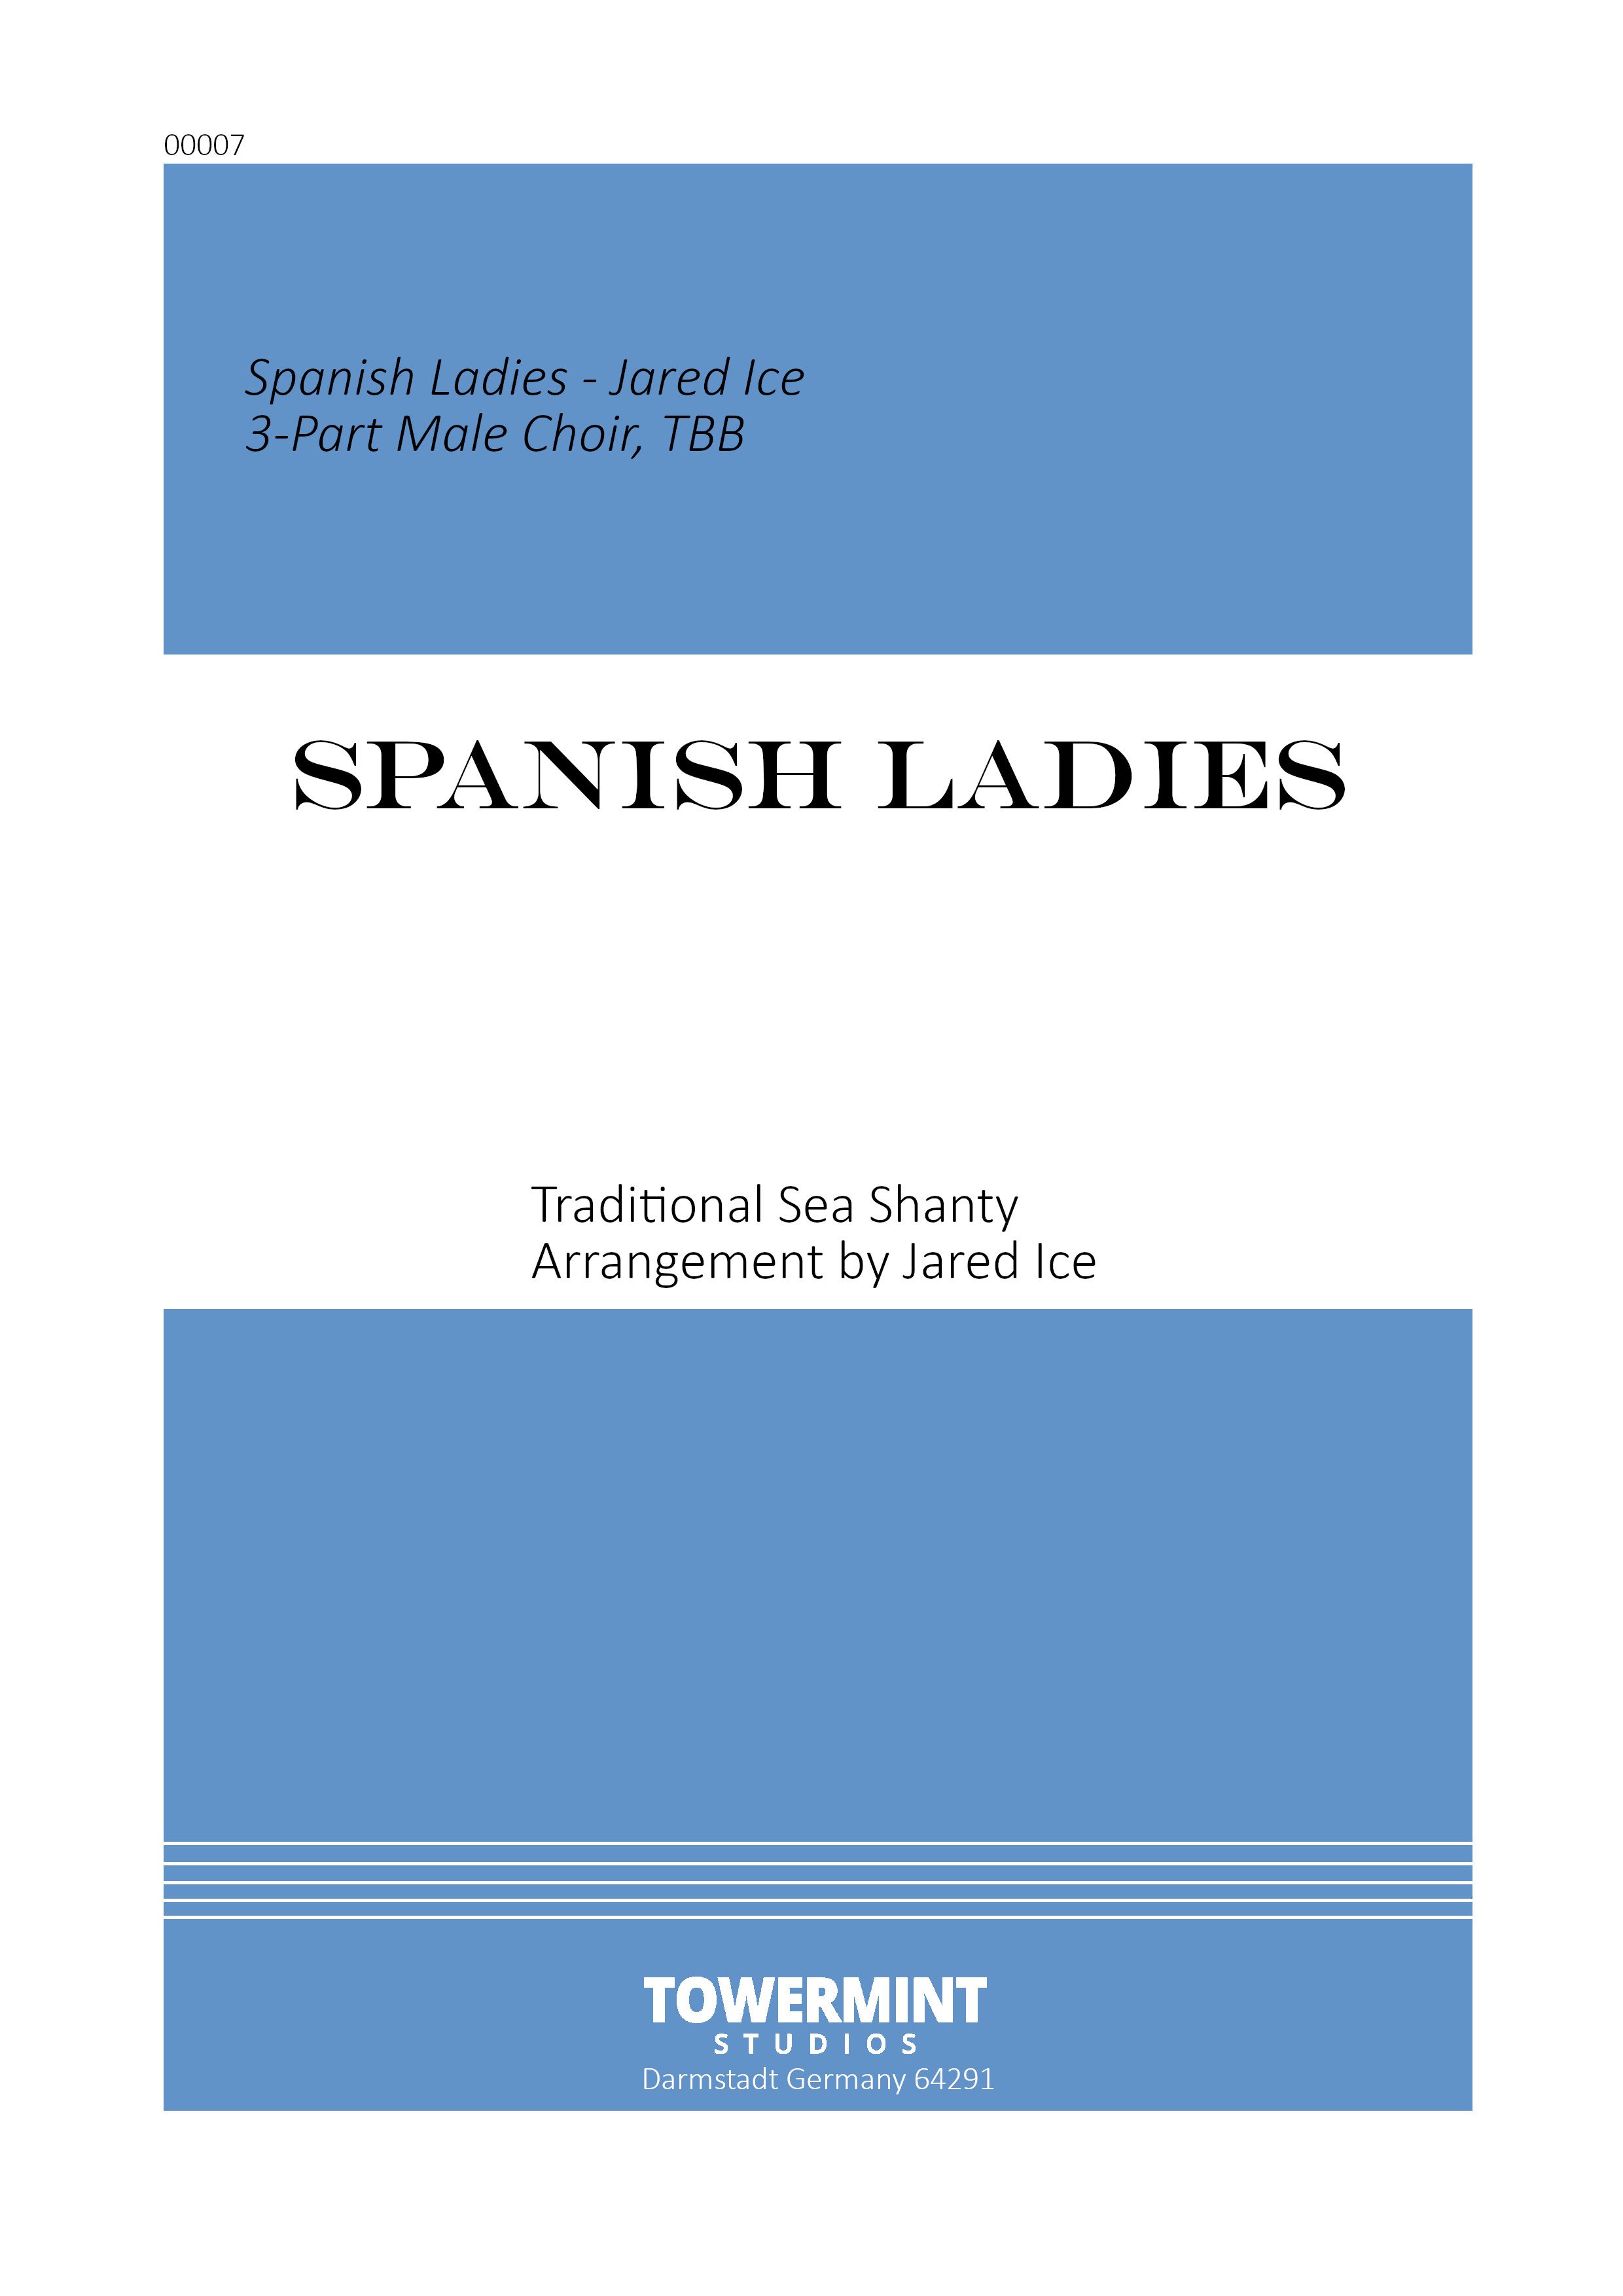 Spanish Ladies Thumbnail.jpg